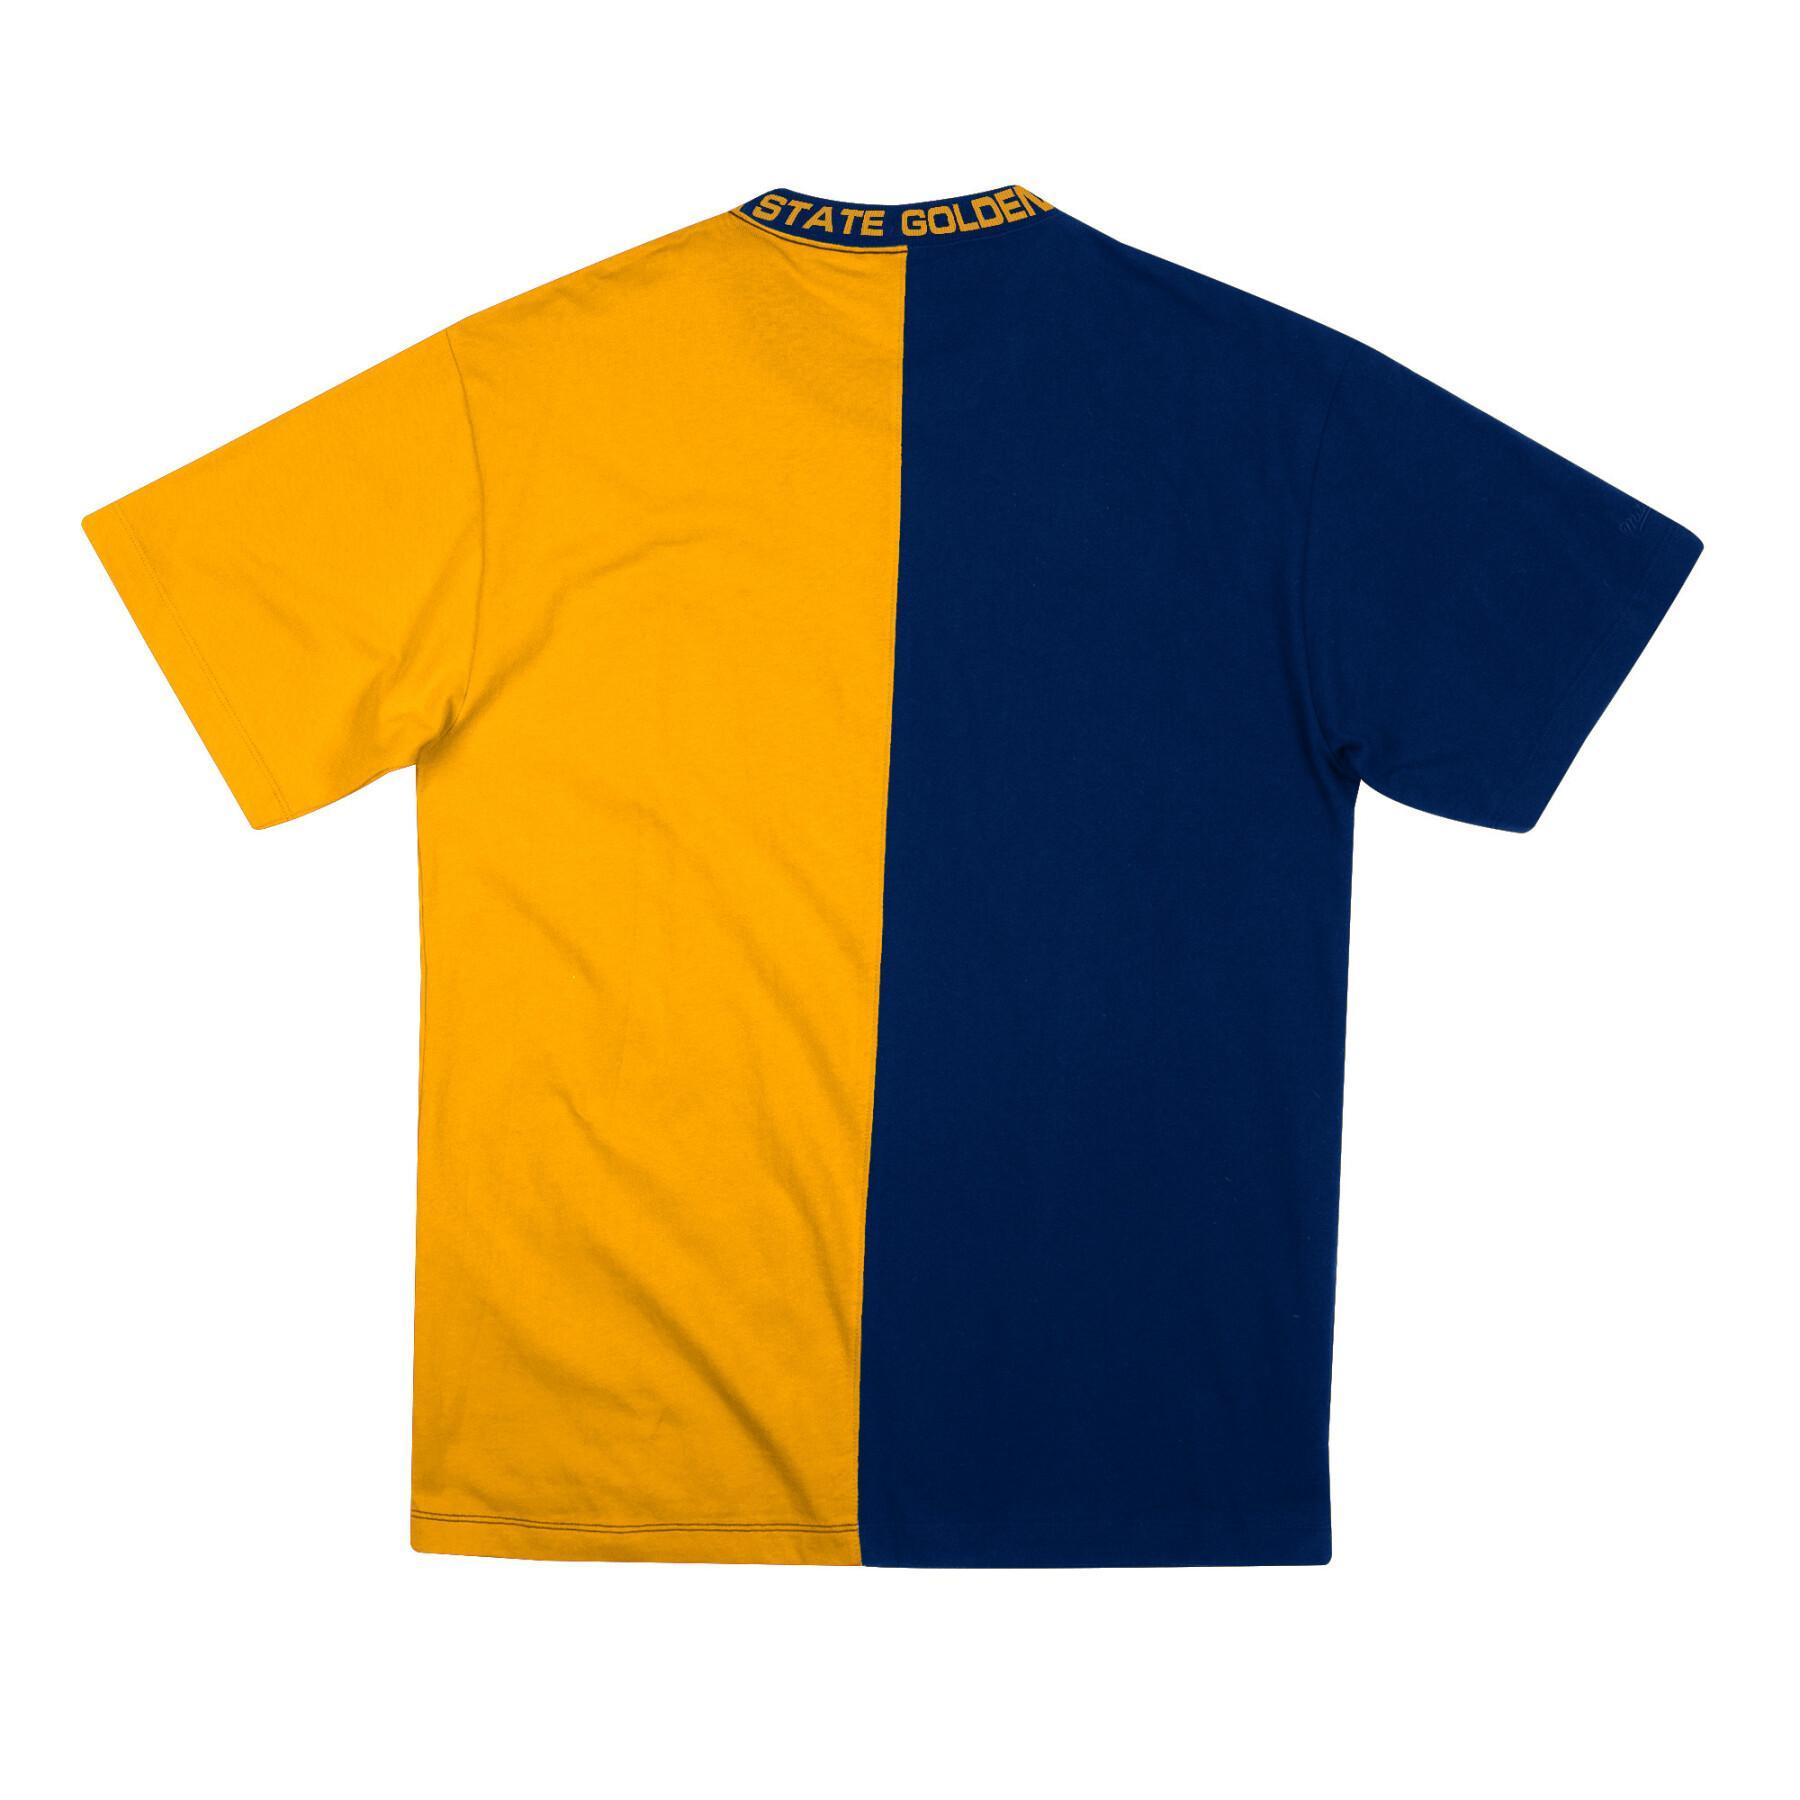 T-shirt Golden State Warriors nba split color